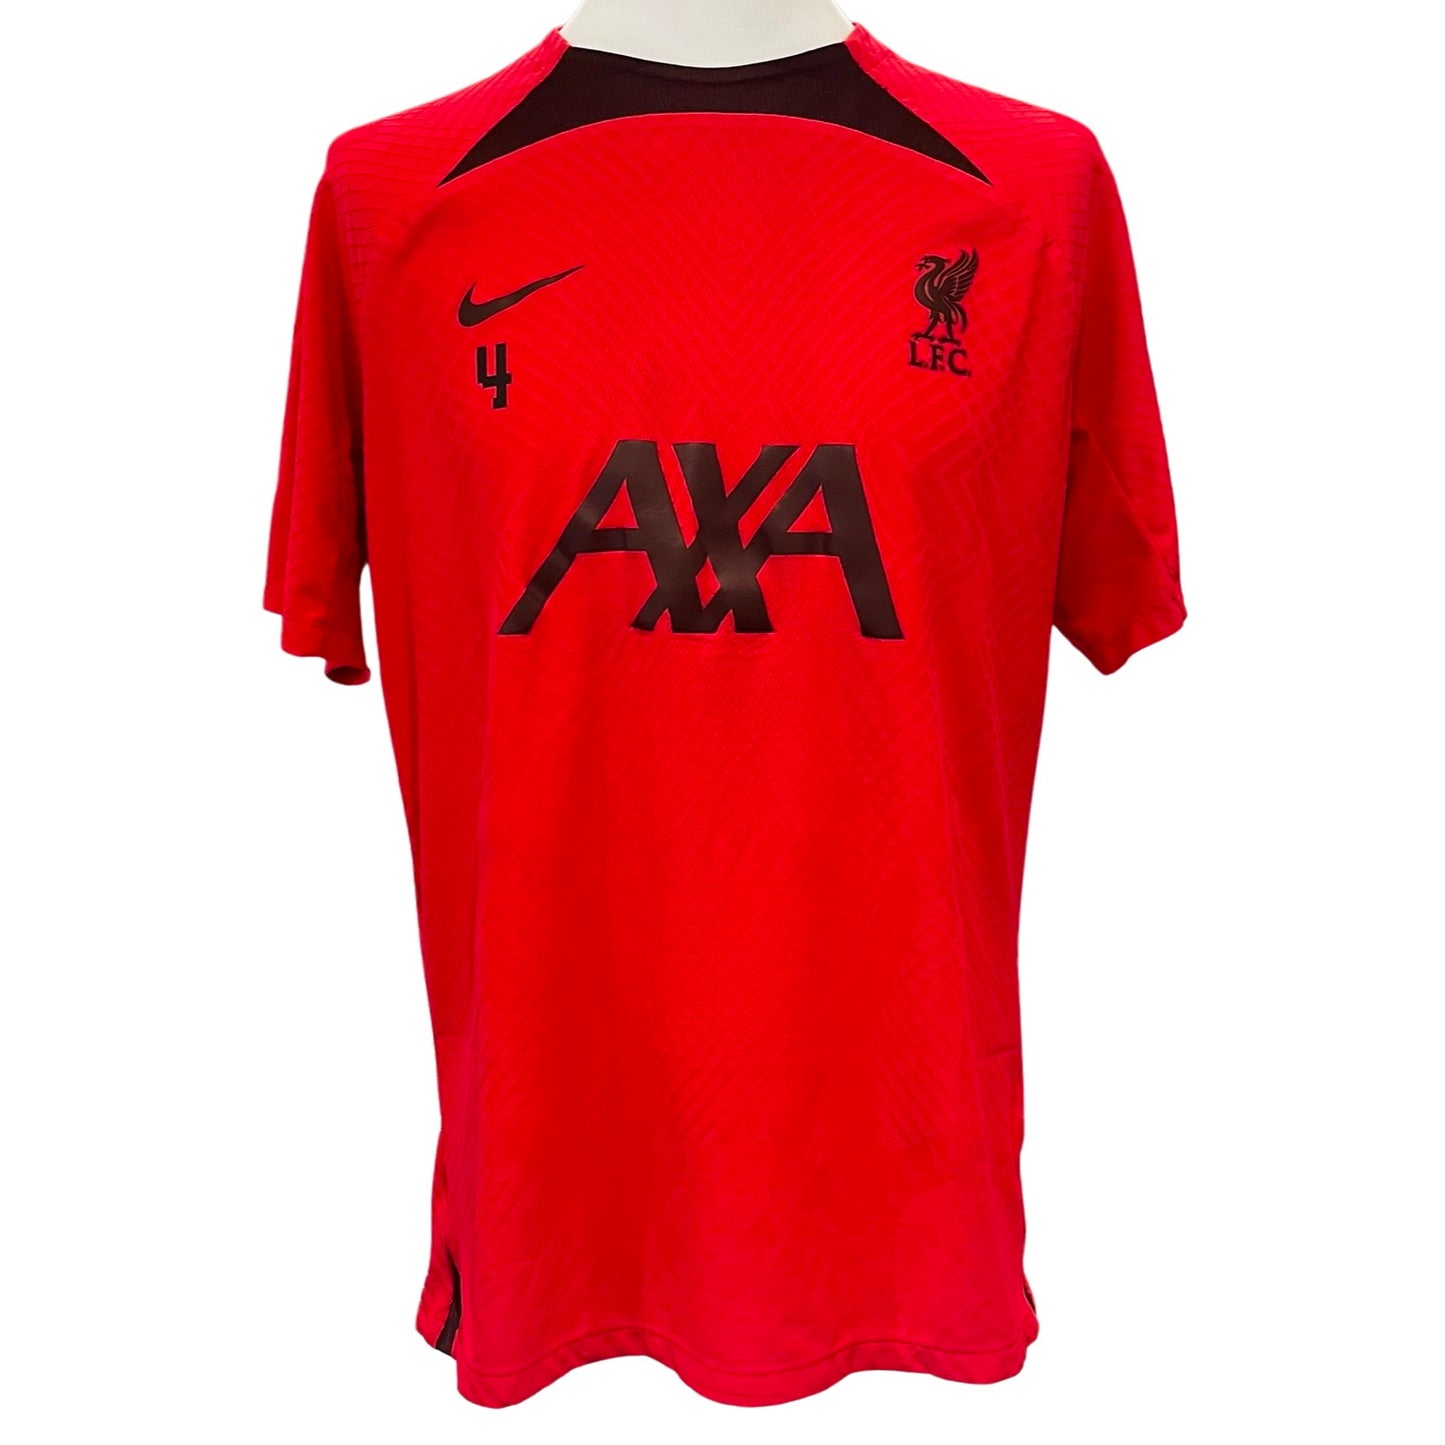 Virgil van Dijk treinando camisa Nike Dri-Fit ADV Liverpool FC usada